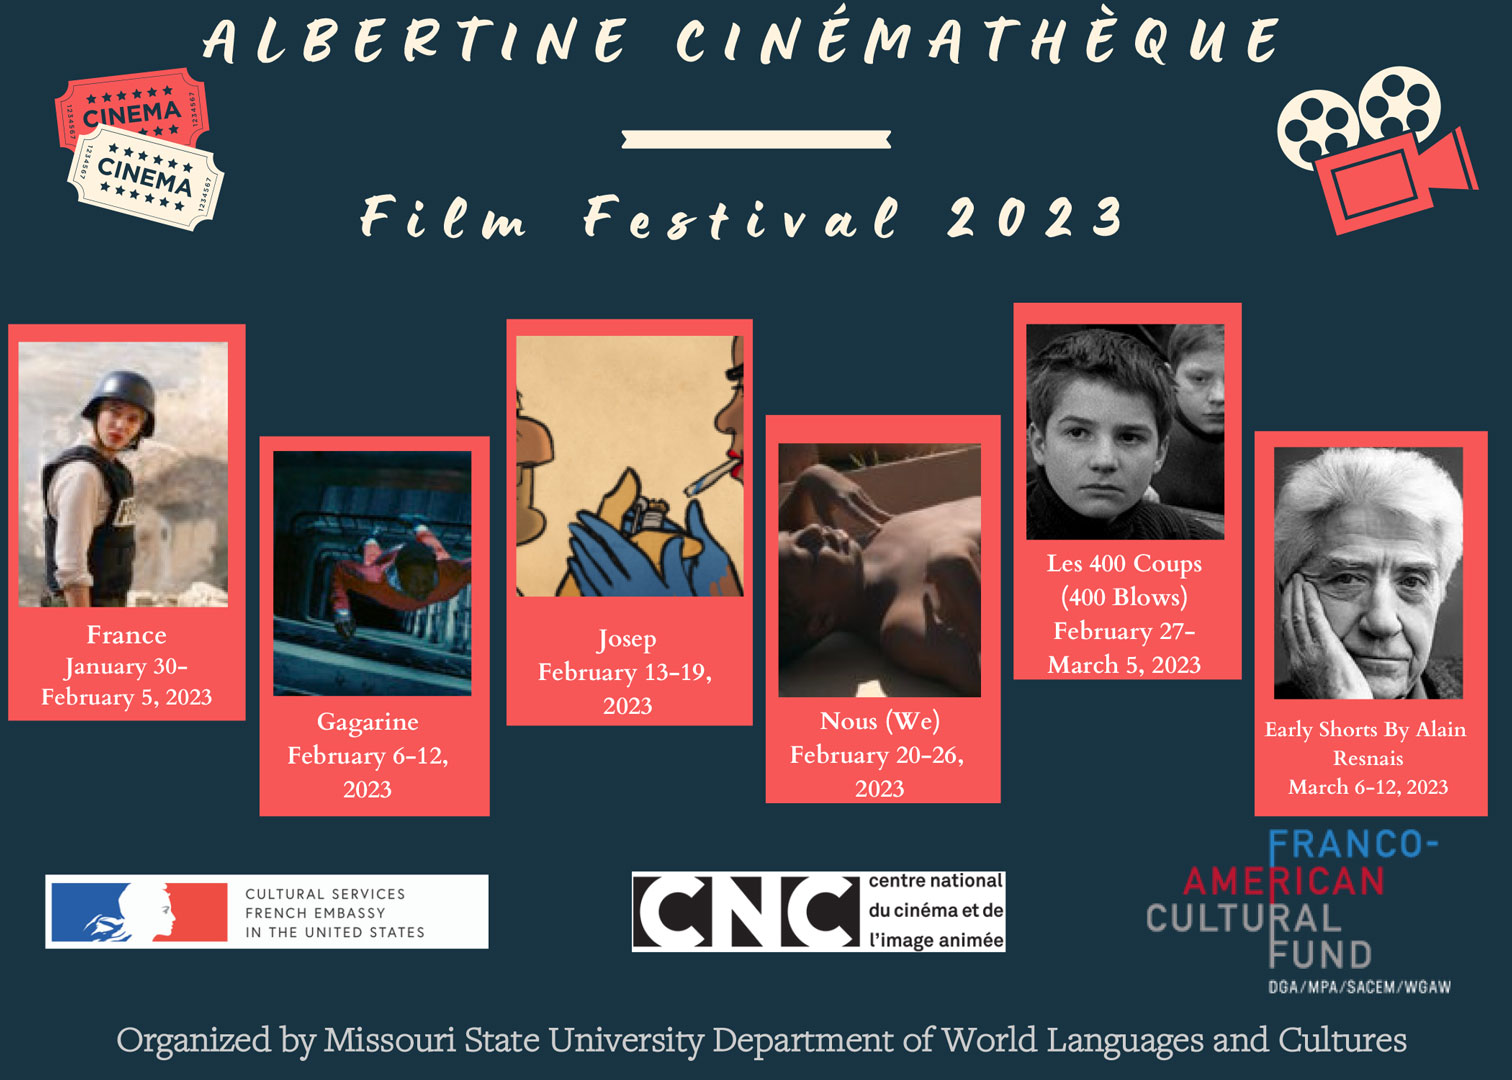 Poster listing all films for the 2023 Albertine Cinémathèque Film Festival